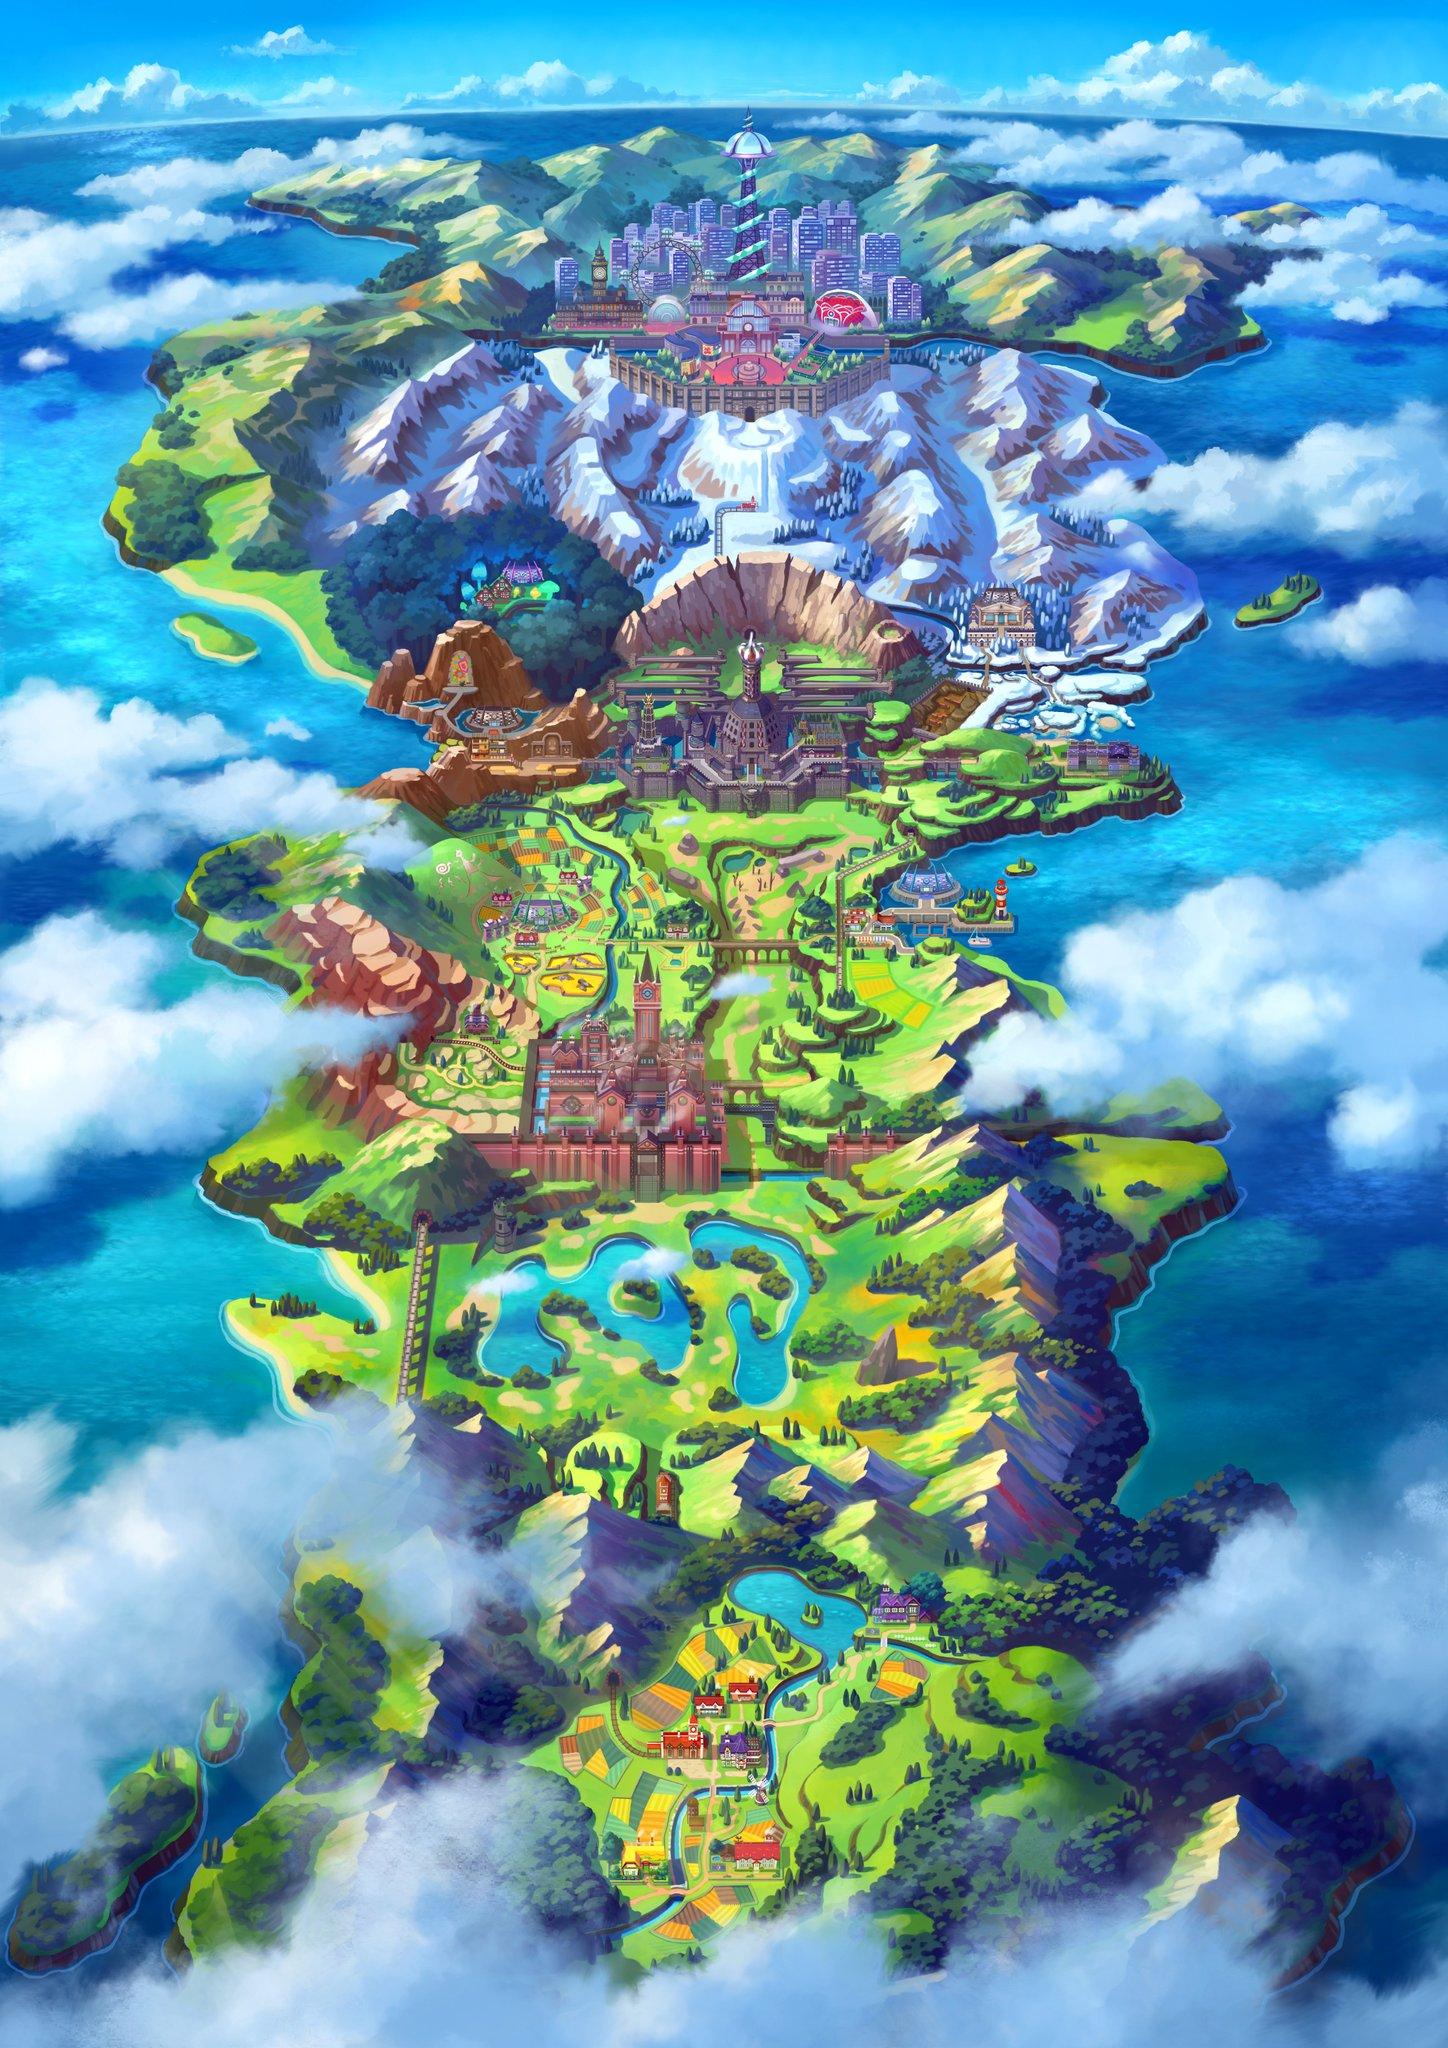 High quality artwork of the Galar Region. Pokémon Sword